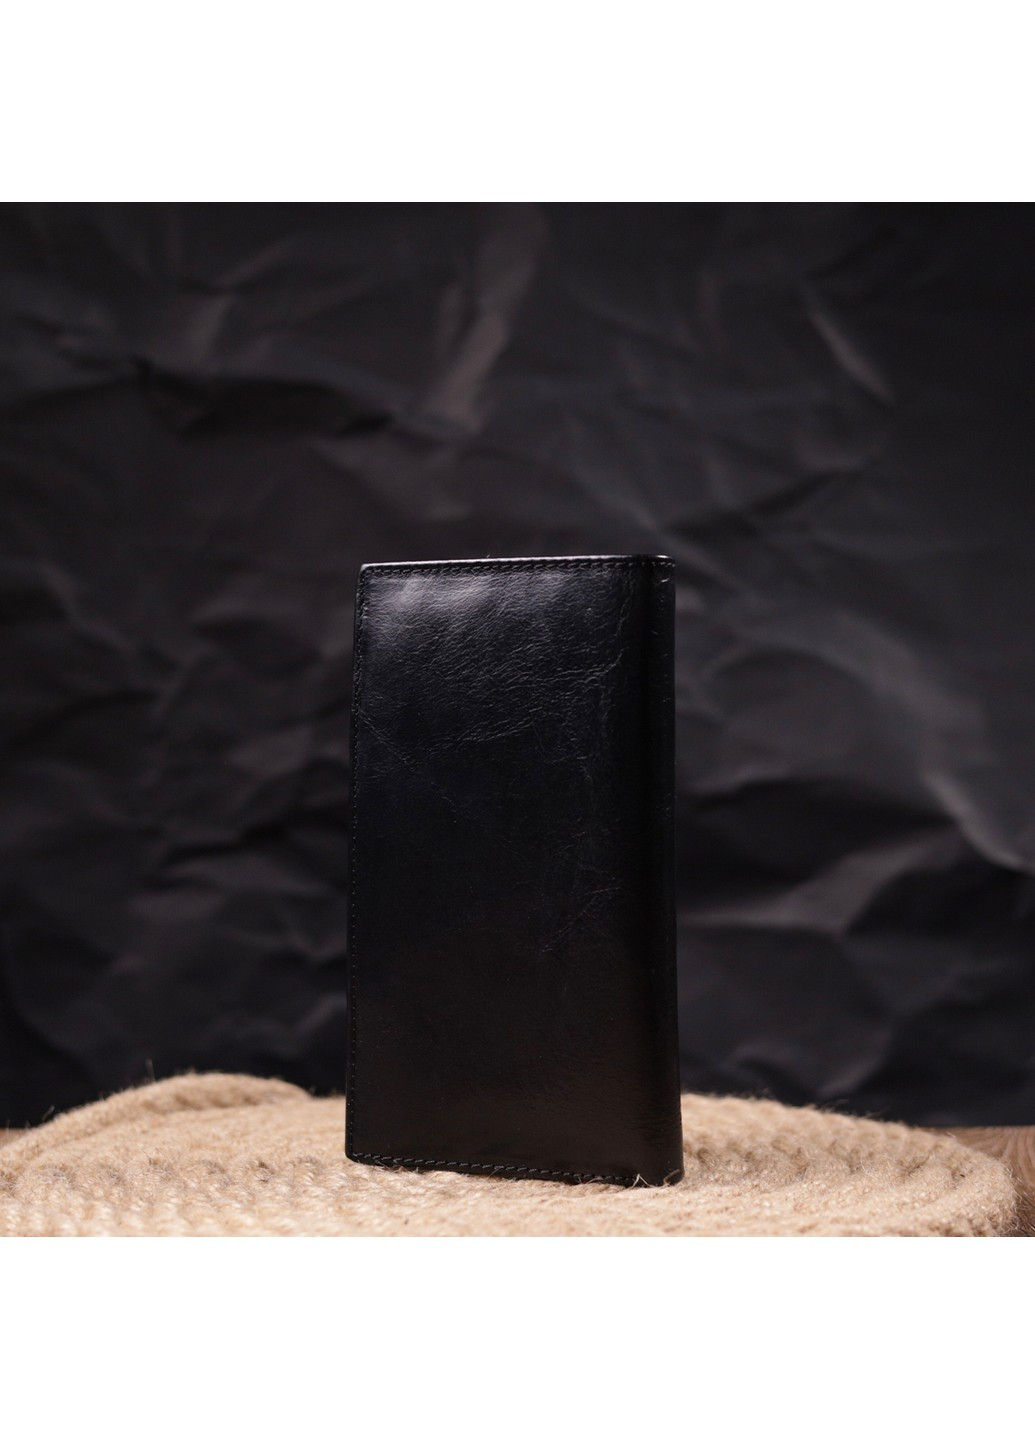 Мужской кошелек st leather (257156517)